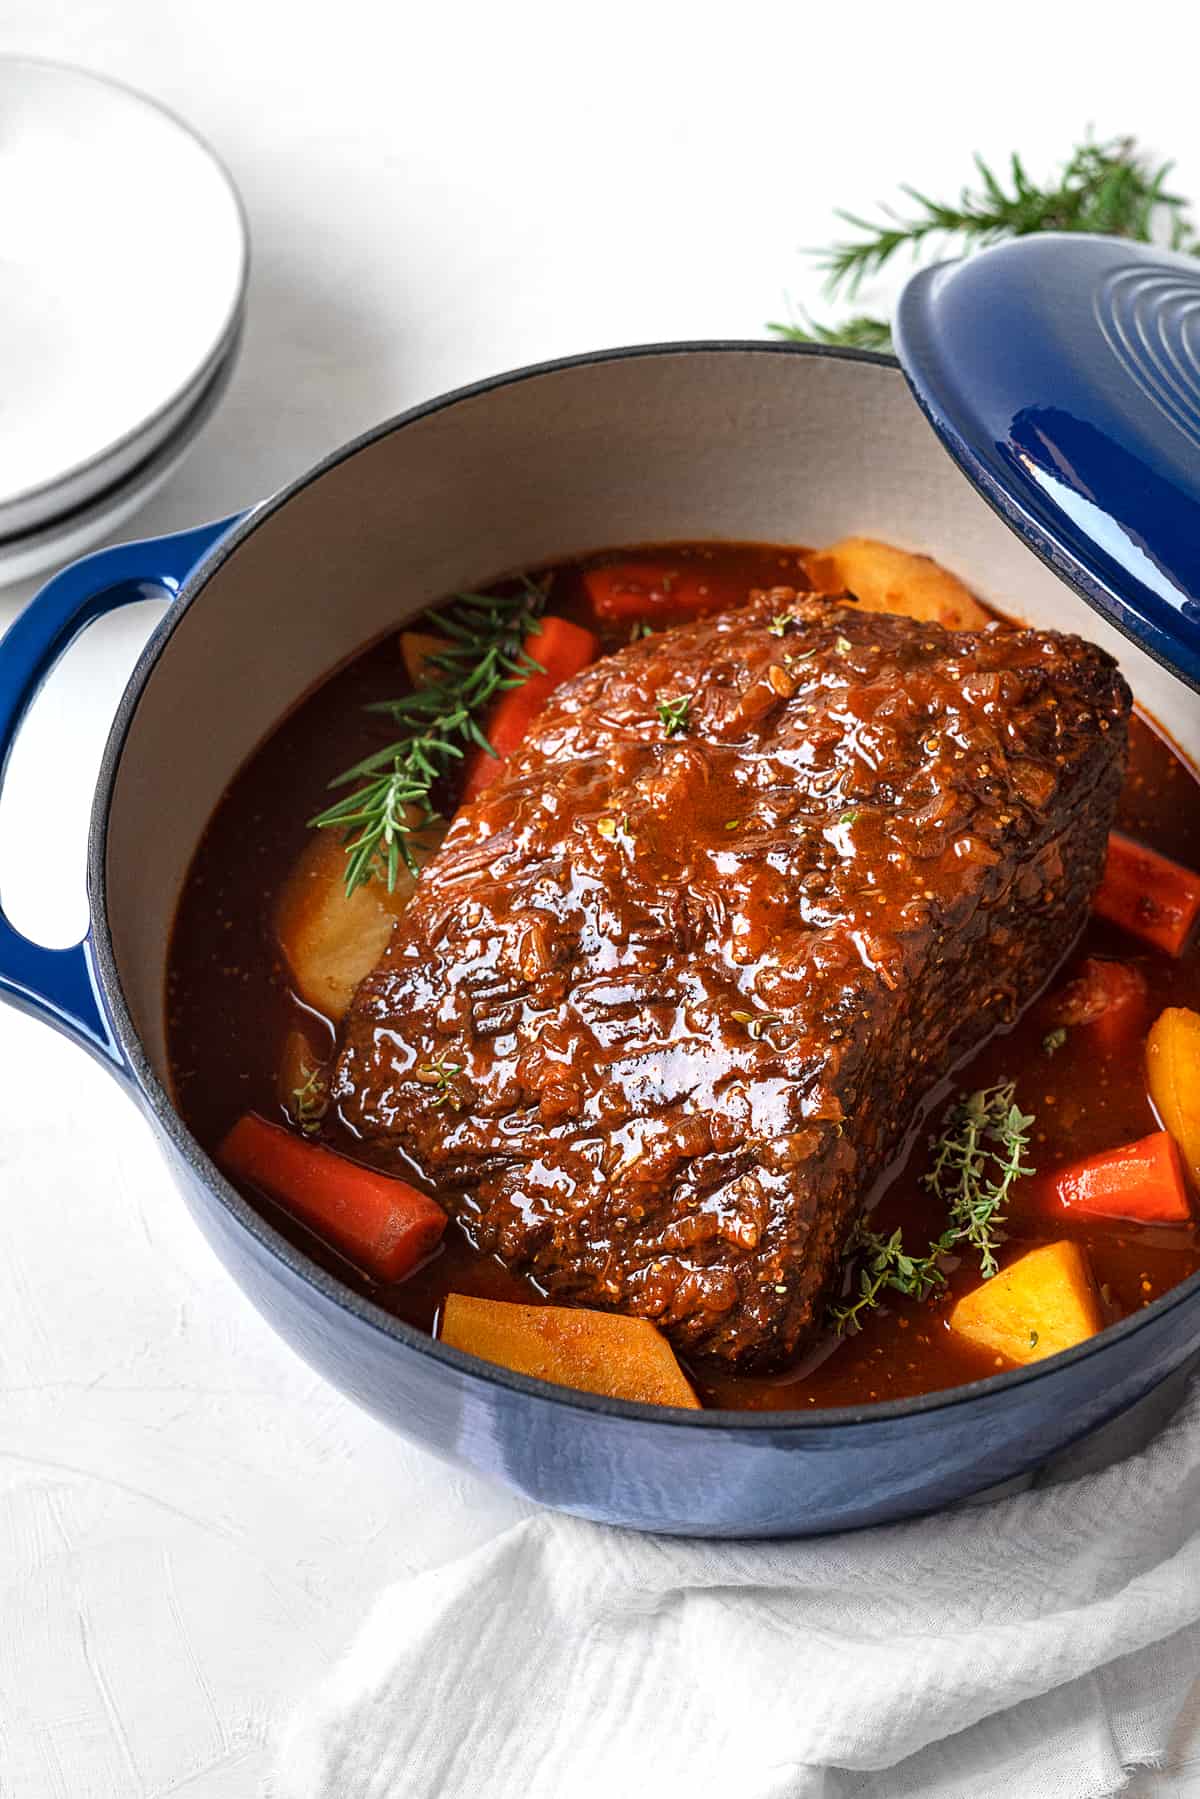 Beef Pot Roast Recipe in the Oven